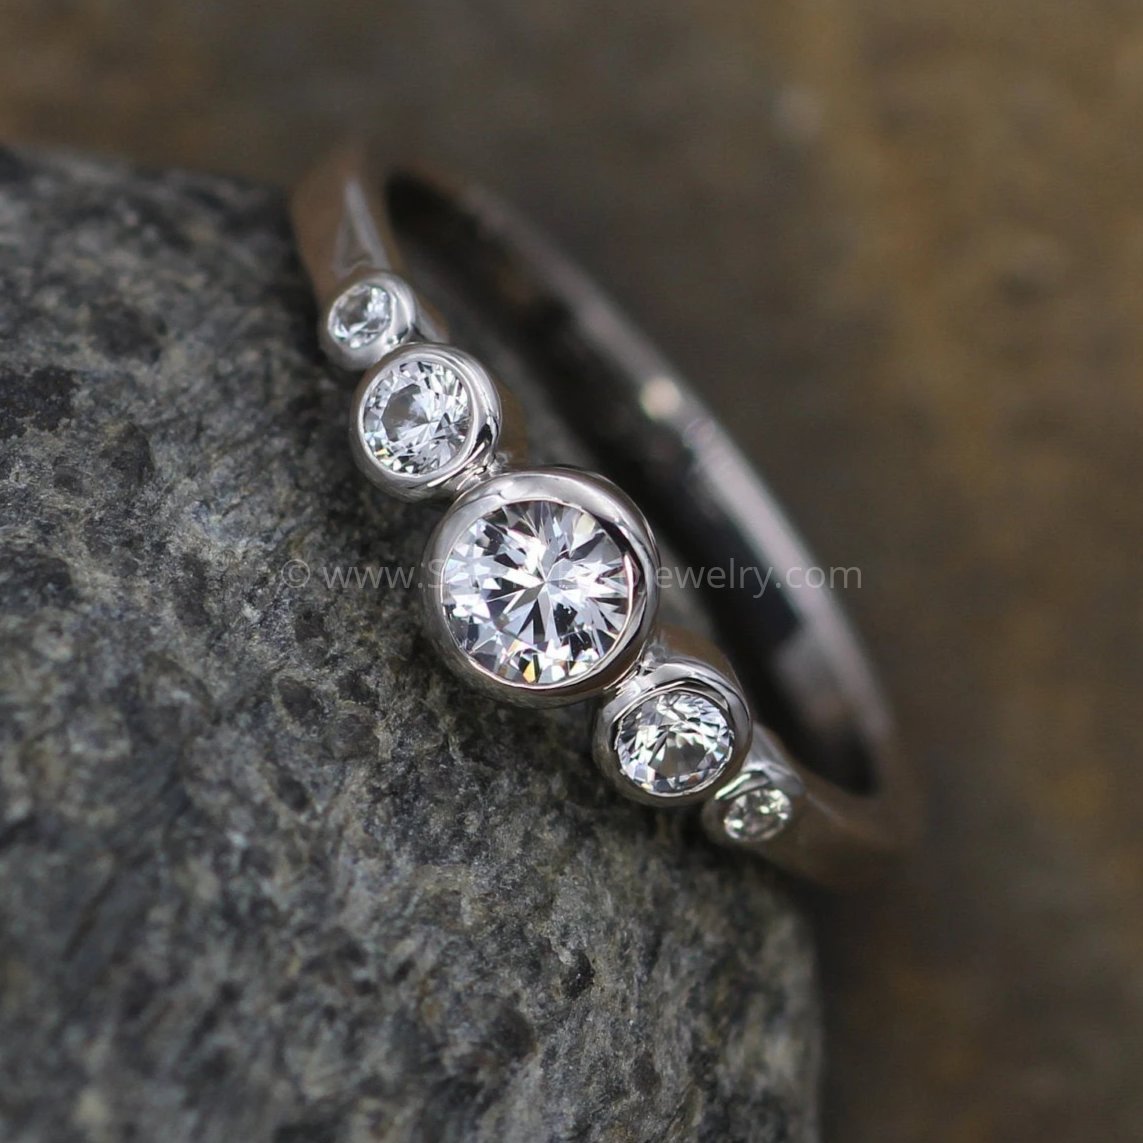 White Sapphire Ring, Certified White Sapphire Gemstone Ring in Copper  panchdhatu Gold Plating Handmade Ring for Men and Women - Etsy | Handmade  gold ring, Gold gemstone ring, White sapphire ring